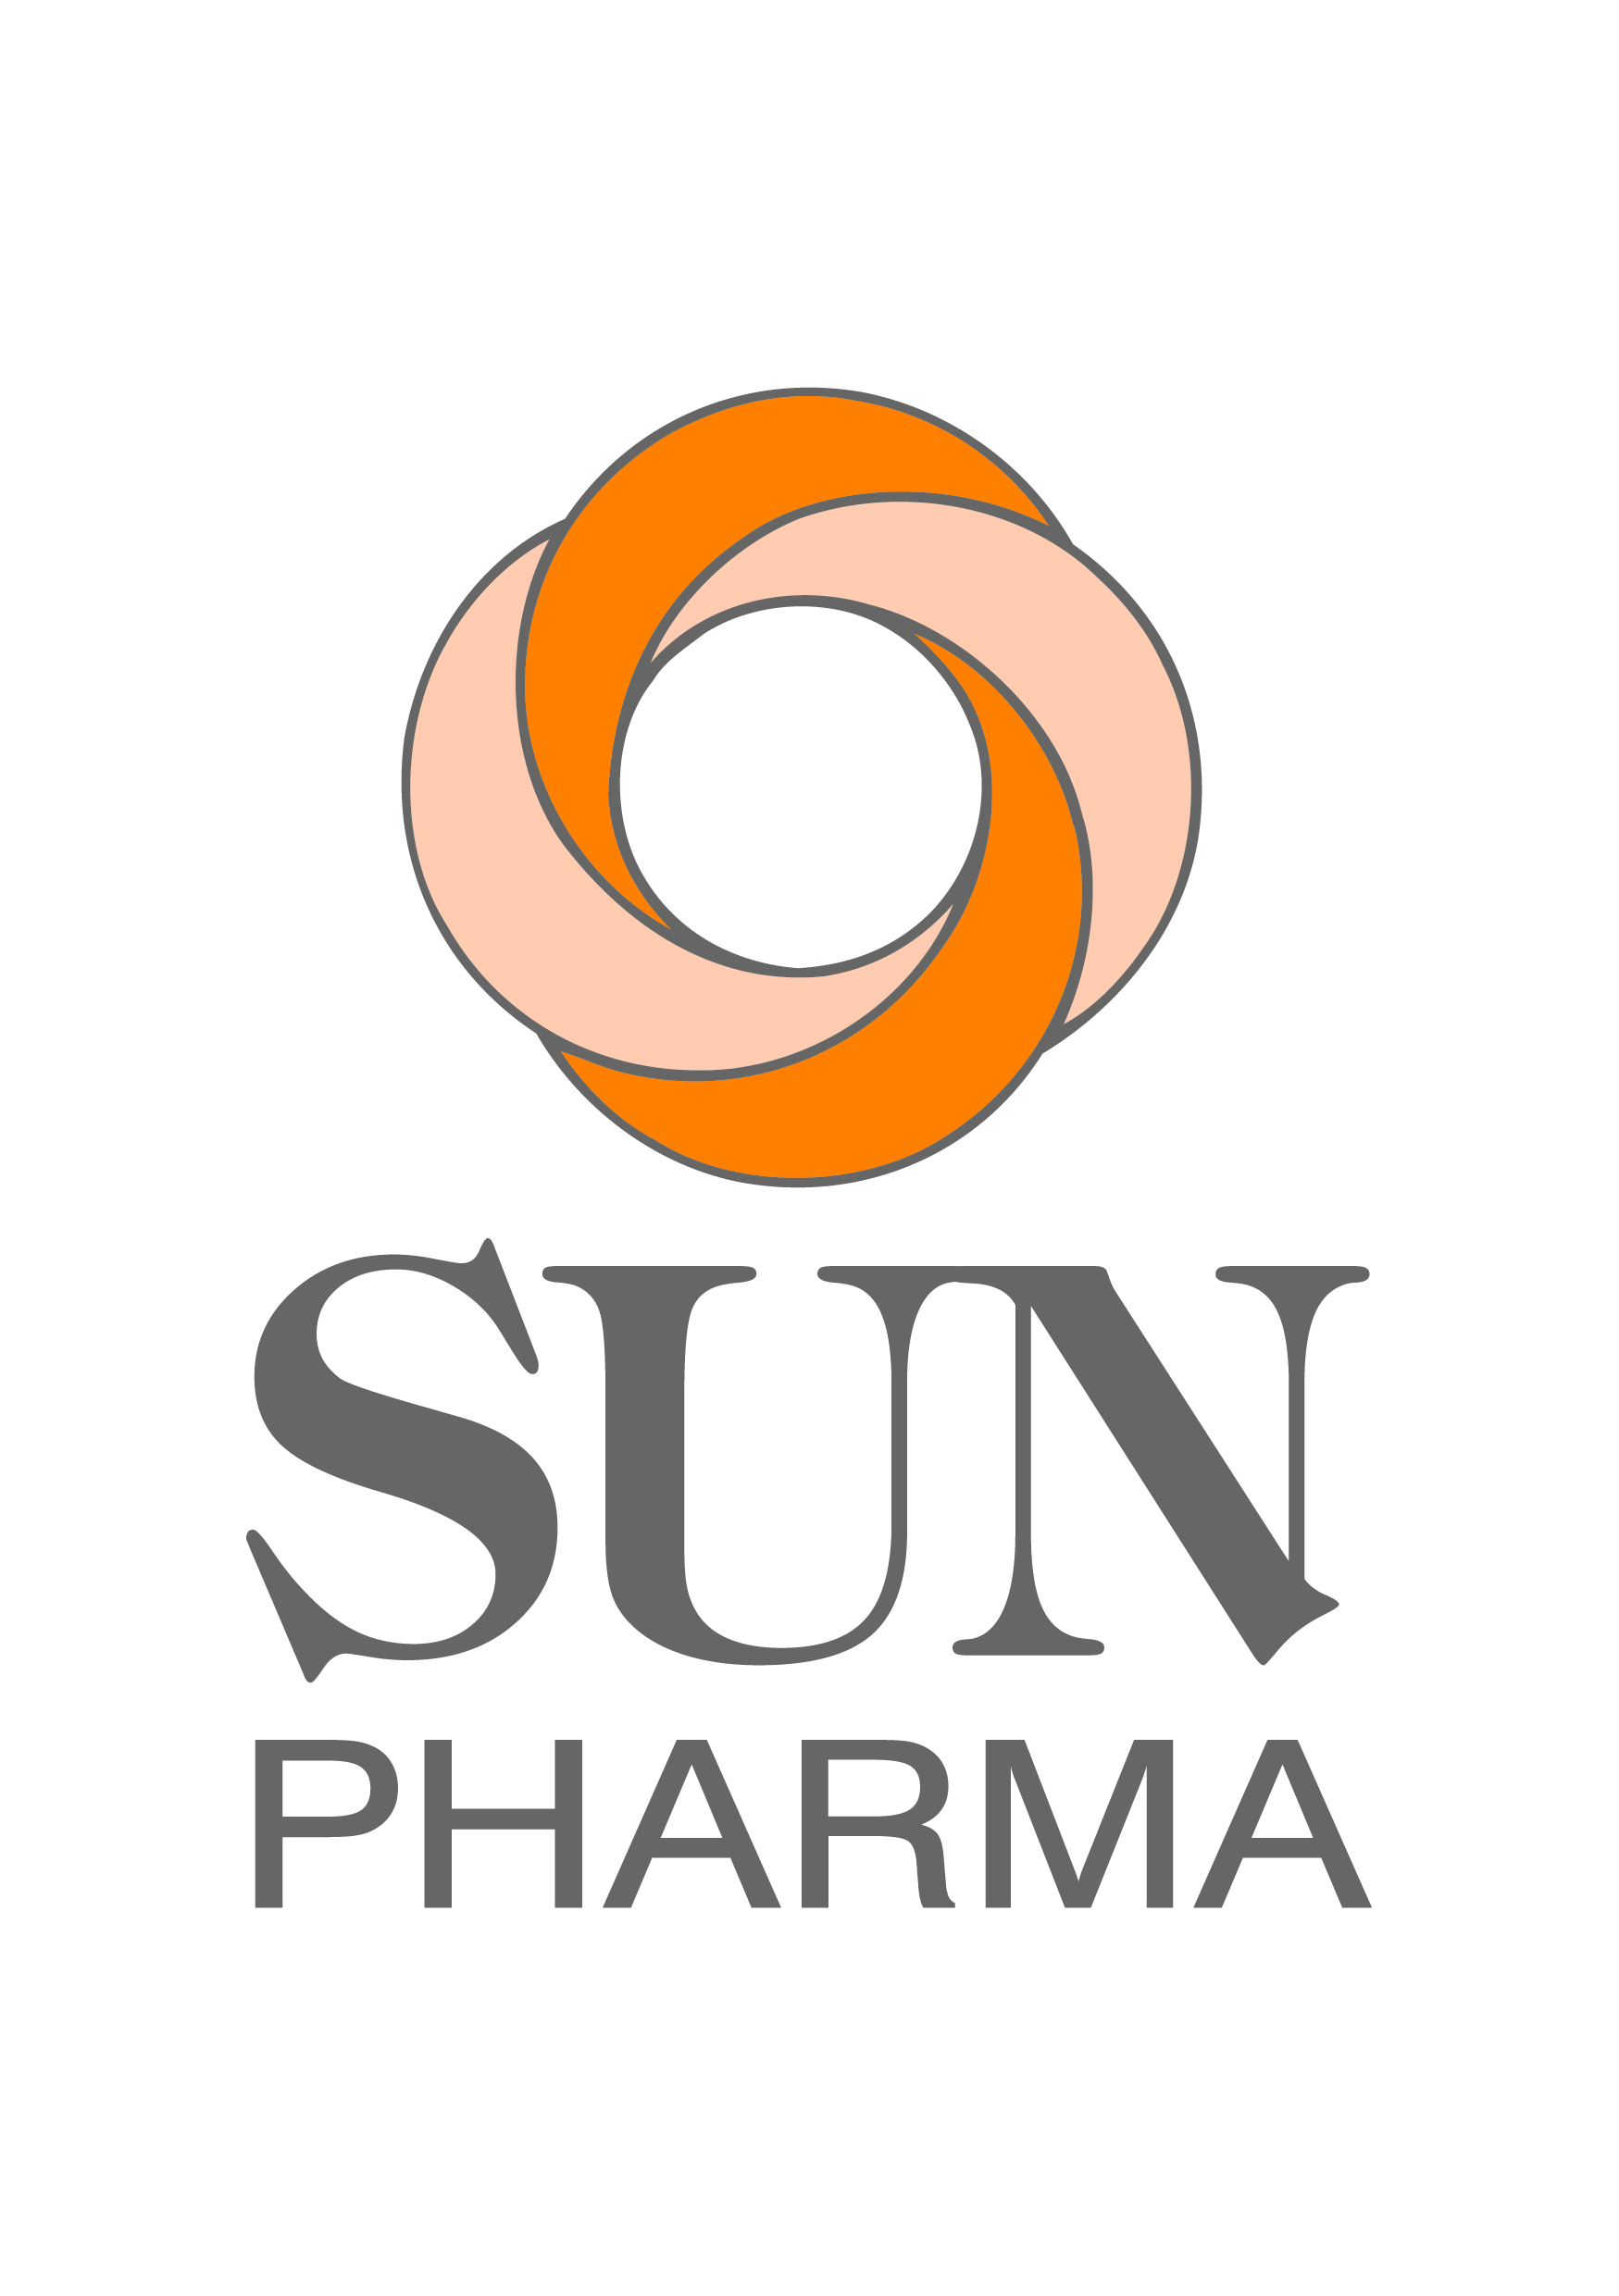 Ranbaxy Laboratories Inc, a SUN PHARMA company